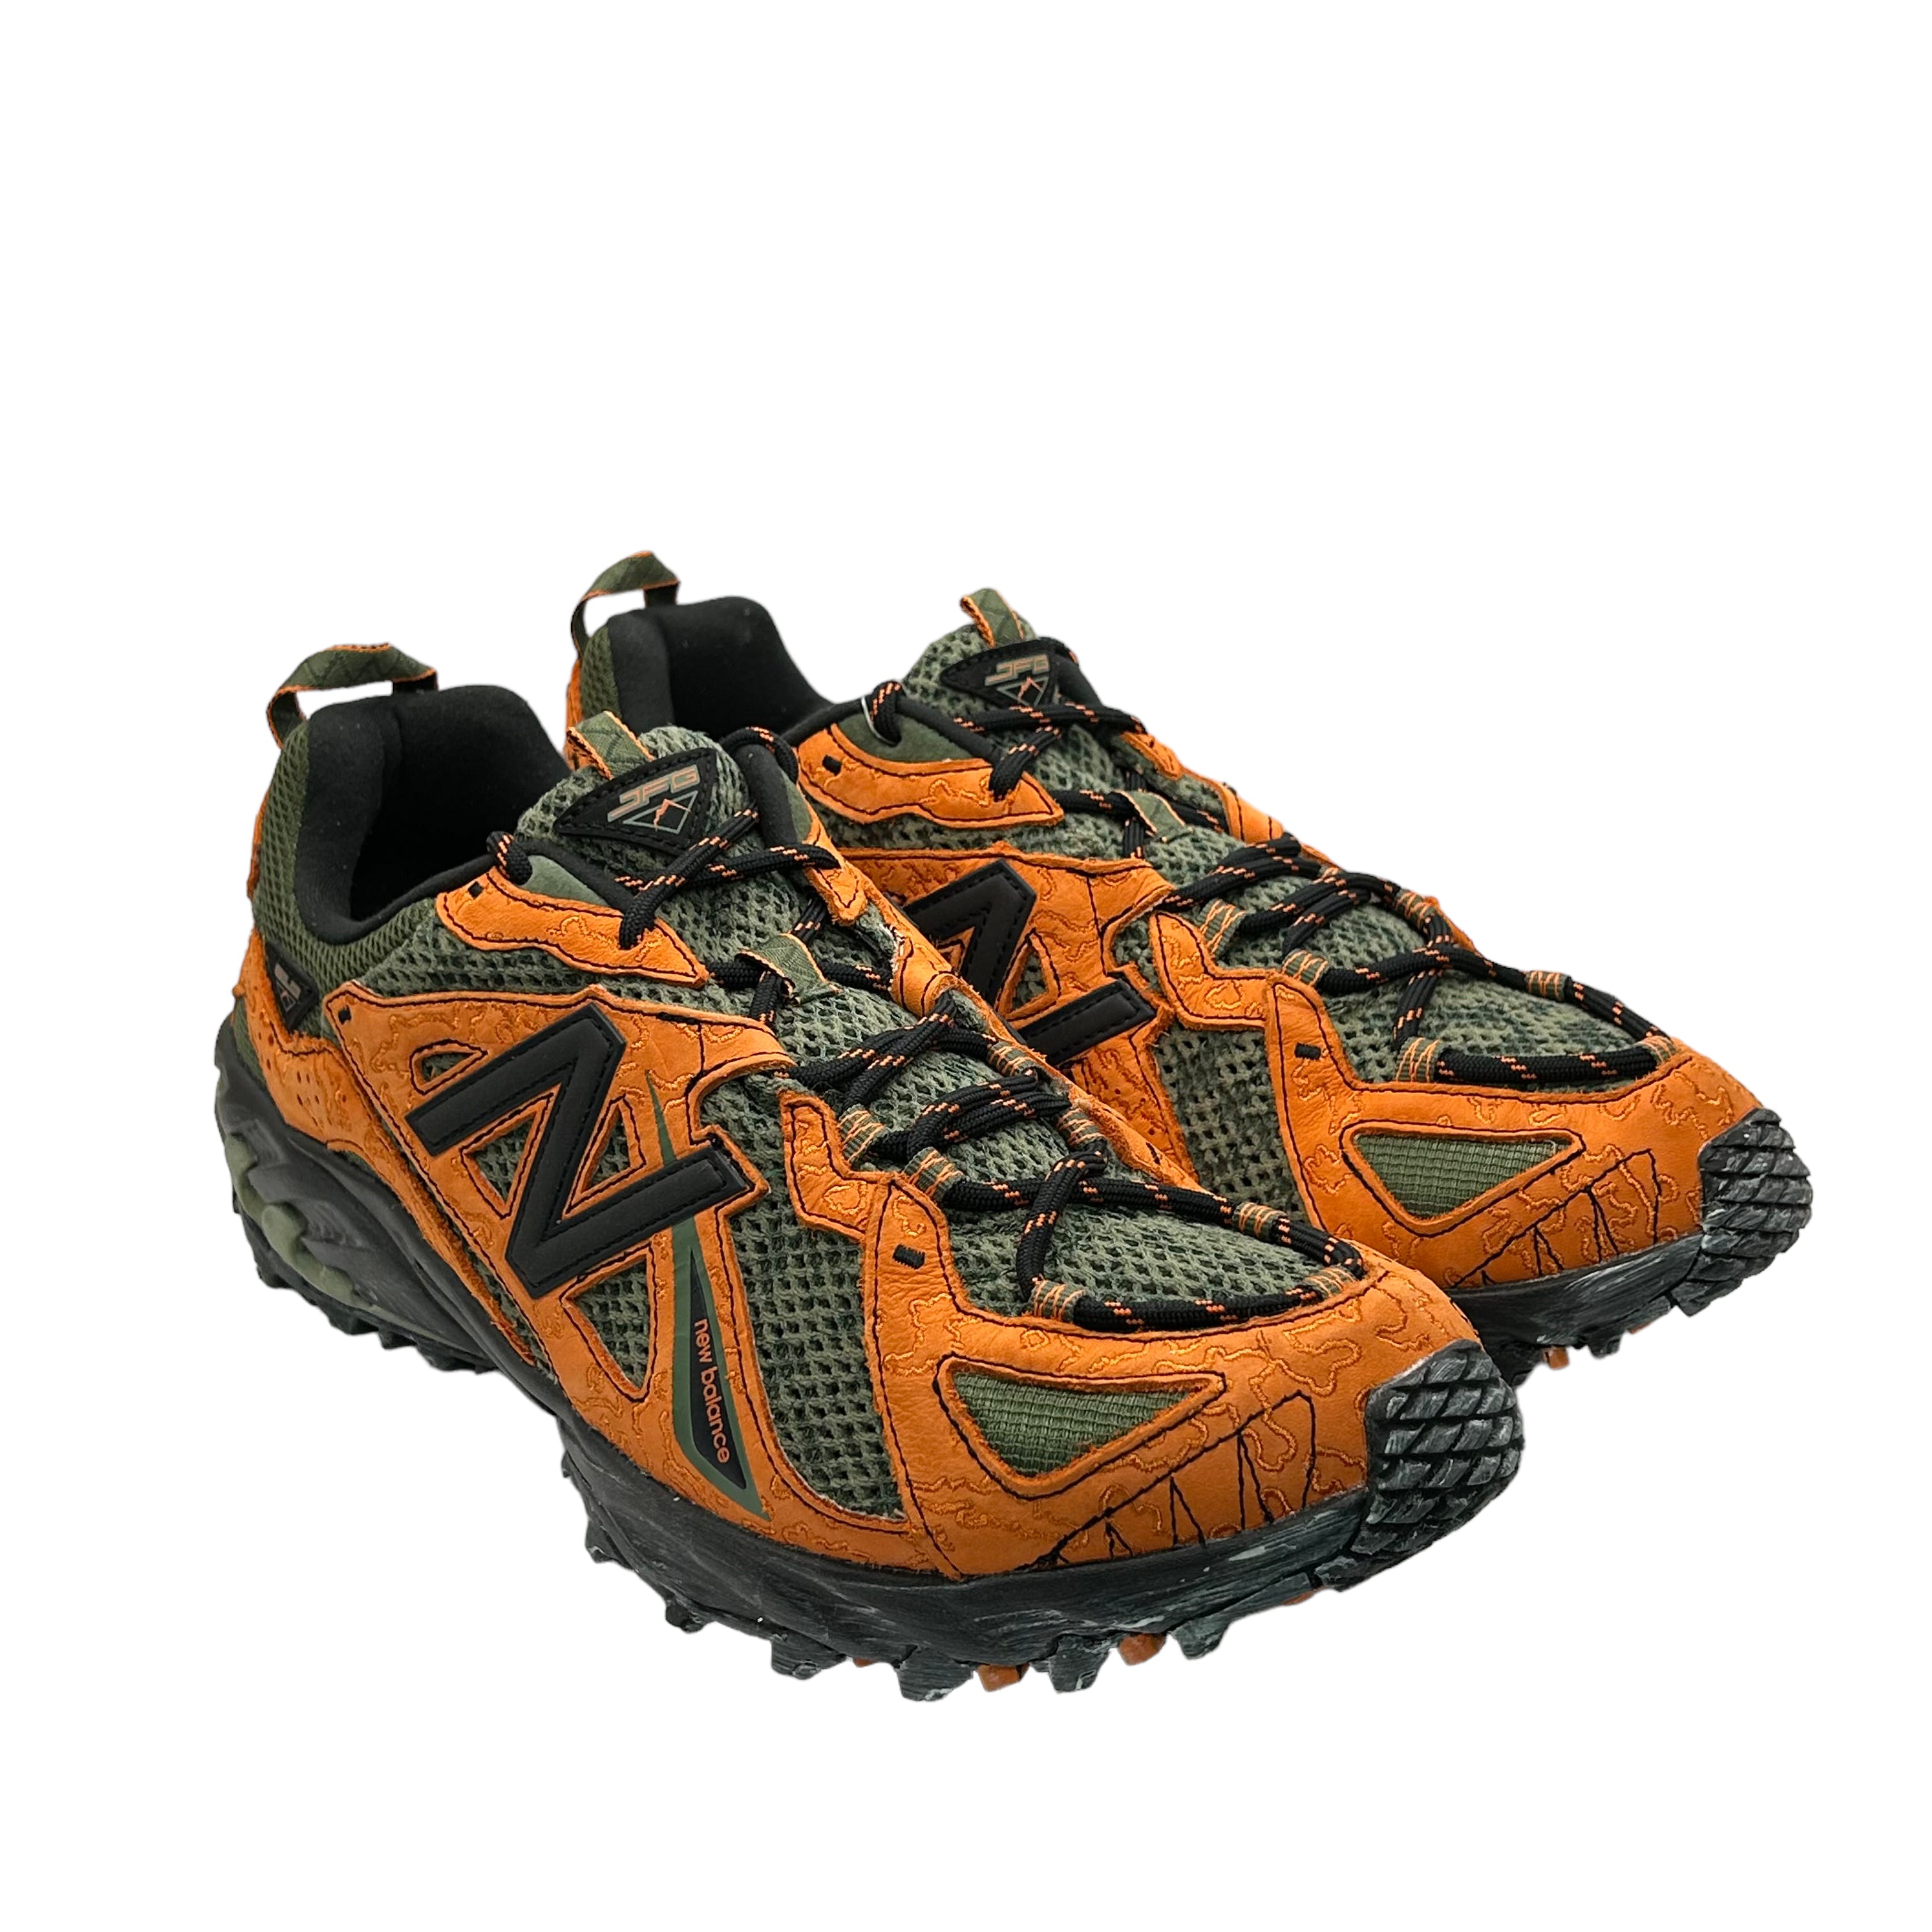 JFG x NB 610 “Lil Swamps” Hiking Shoe - 8